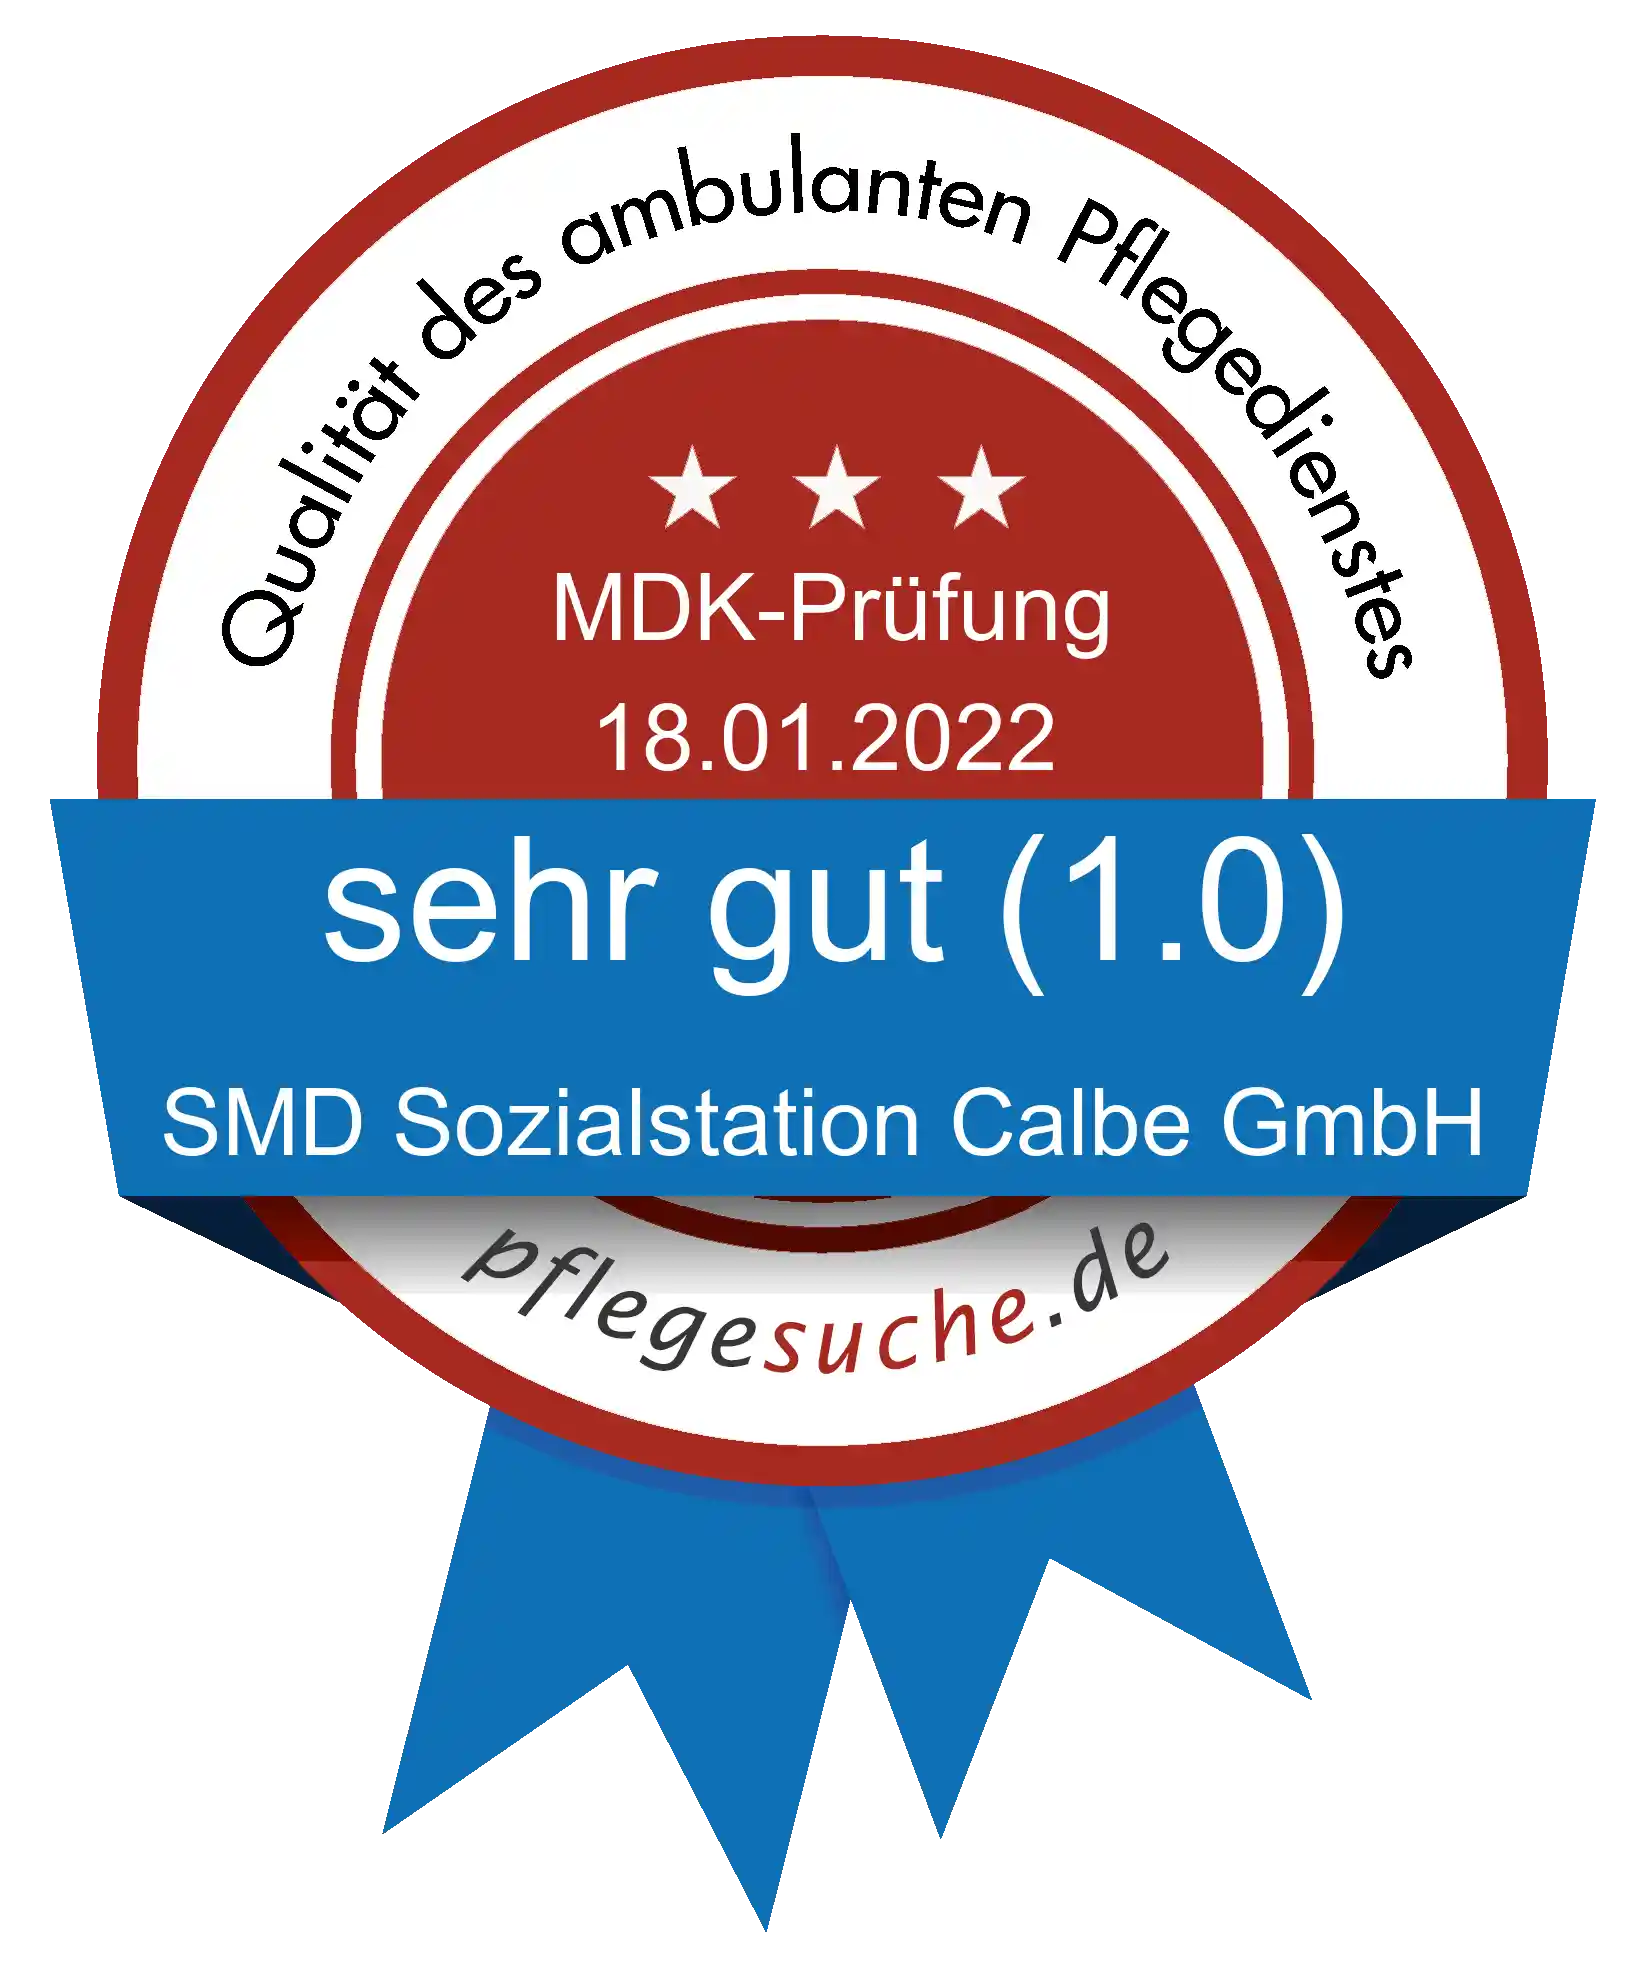 Siegel Benotung: SMD Sozialstation Calbe GmbH